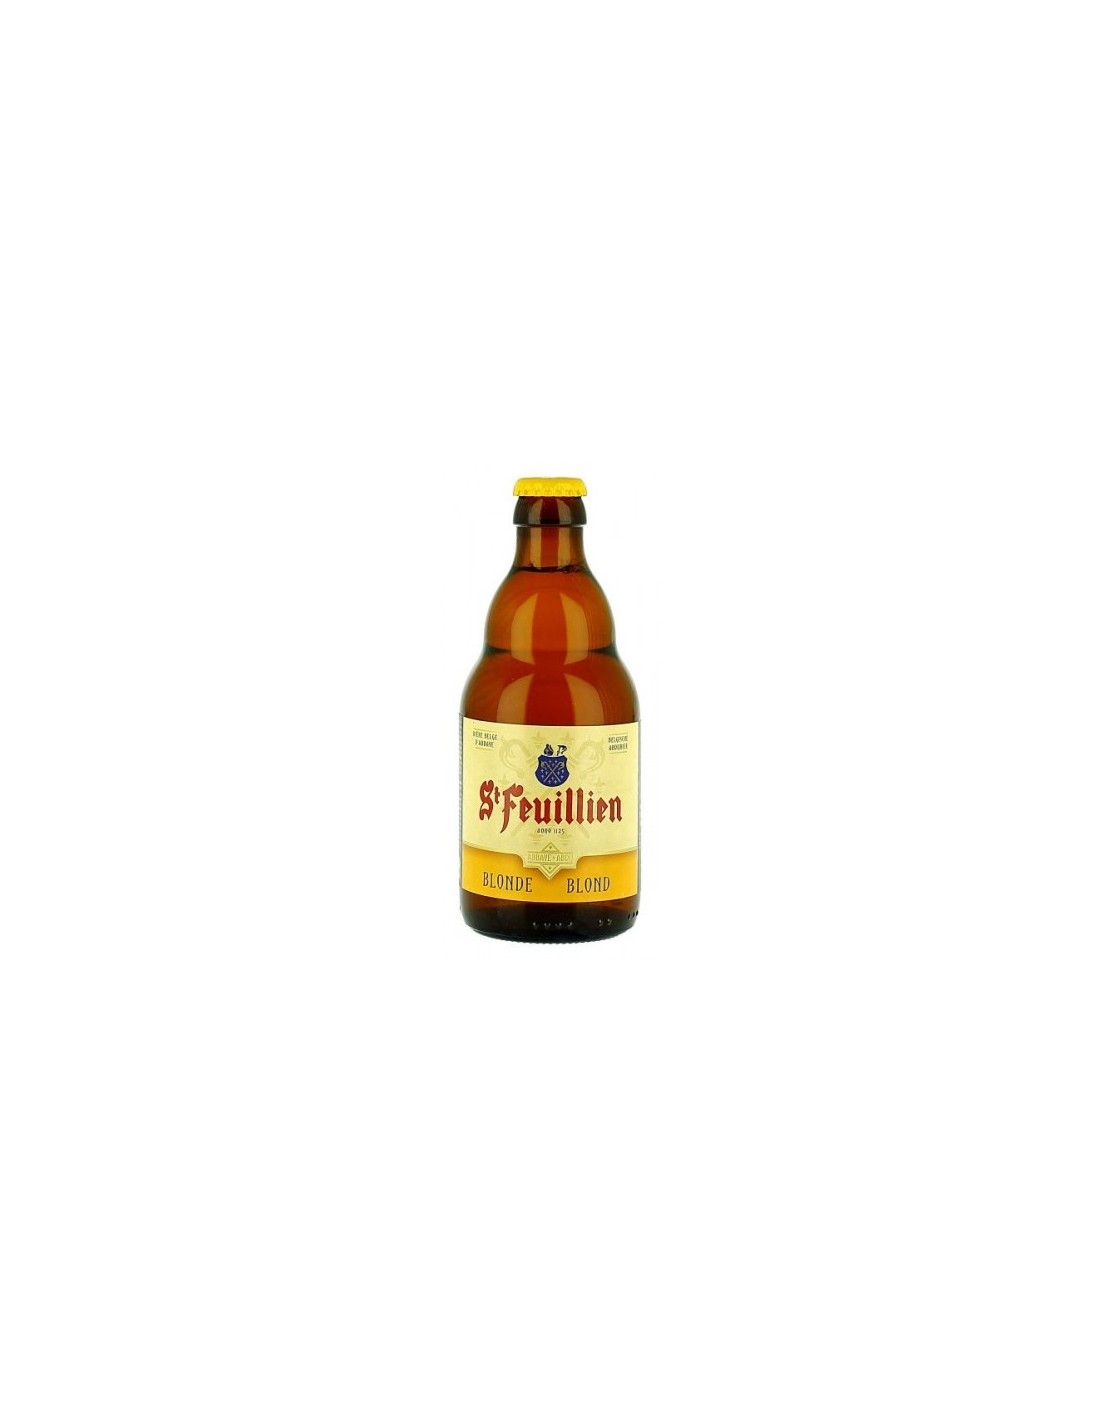 Bere blonda St Feuillen, 7.5% alc., 0.33L, Belgia alcooldiscount.ro